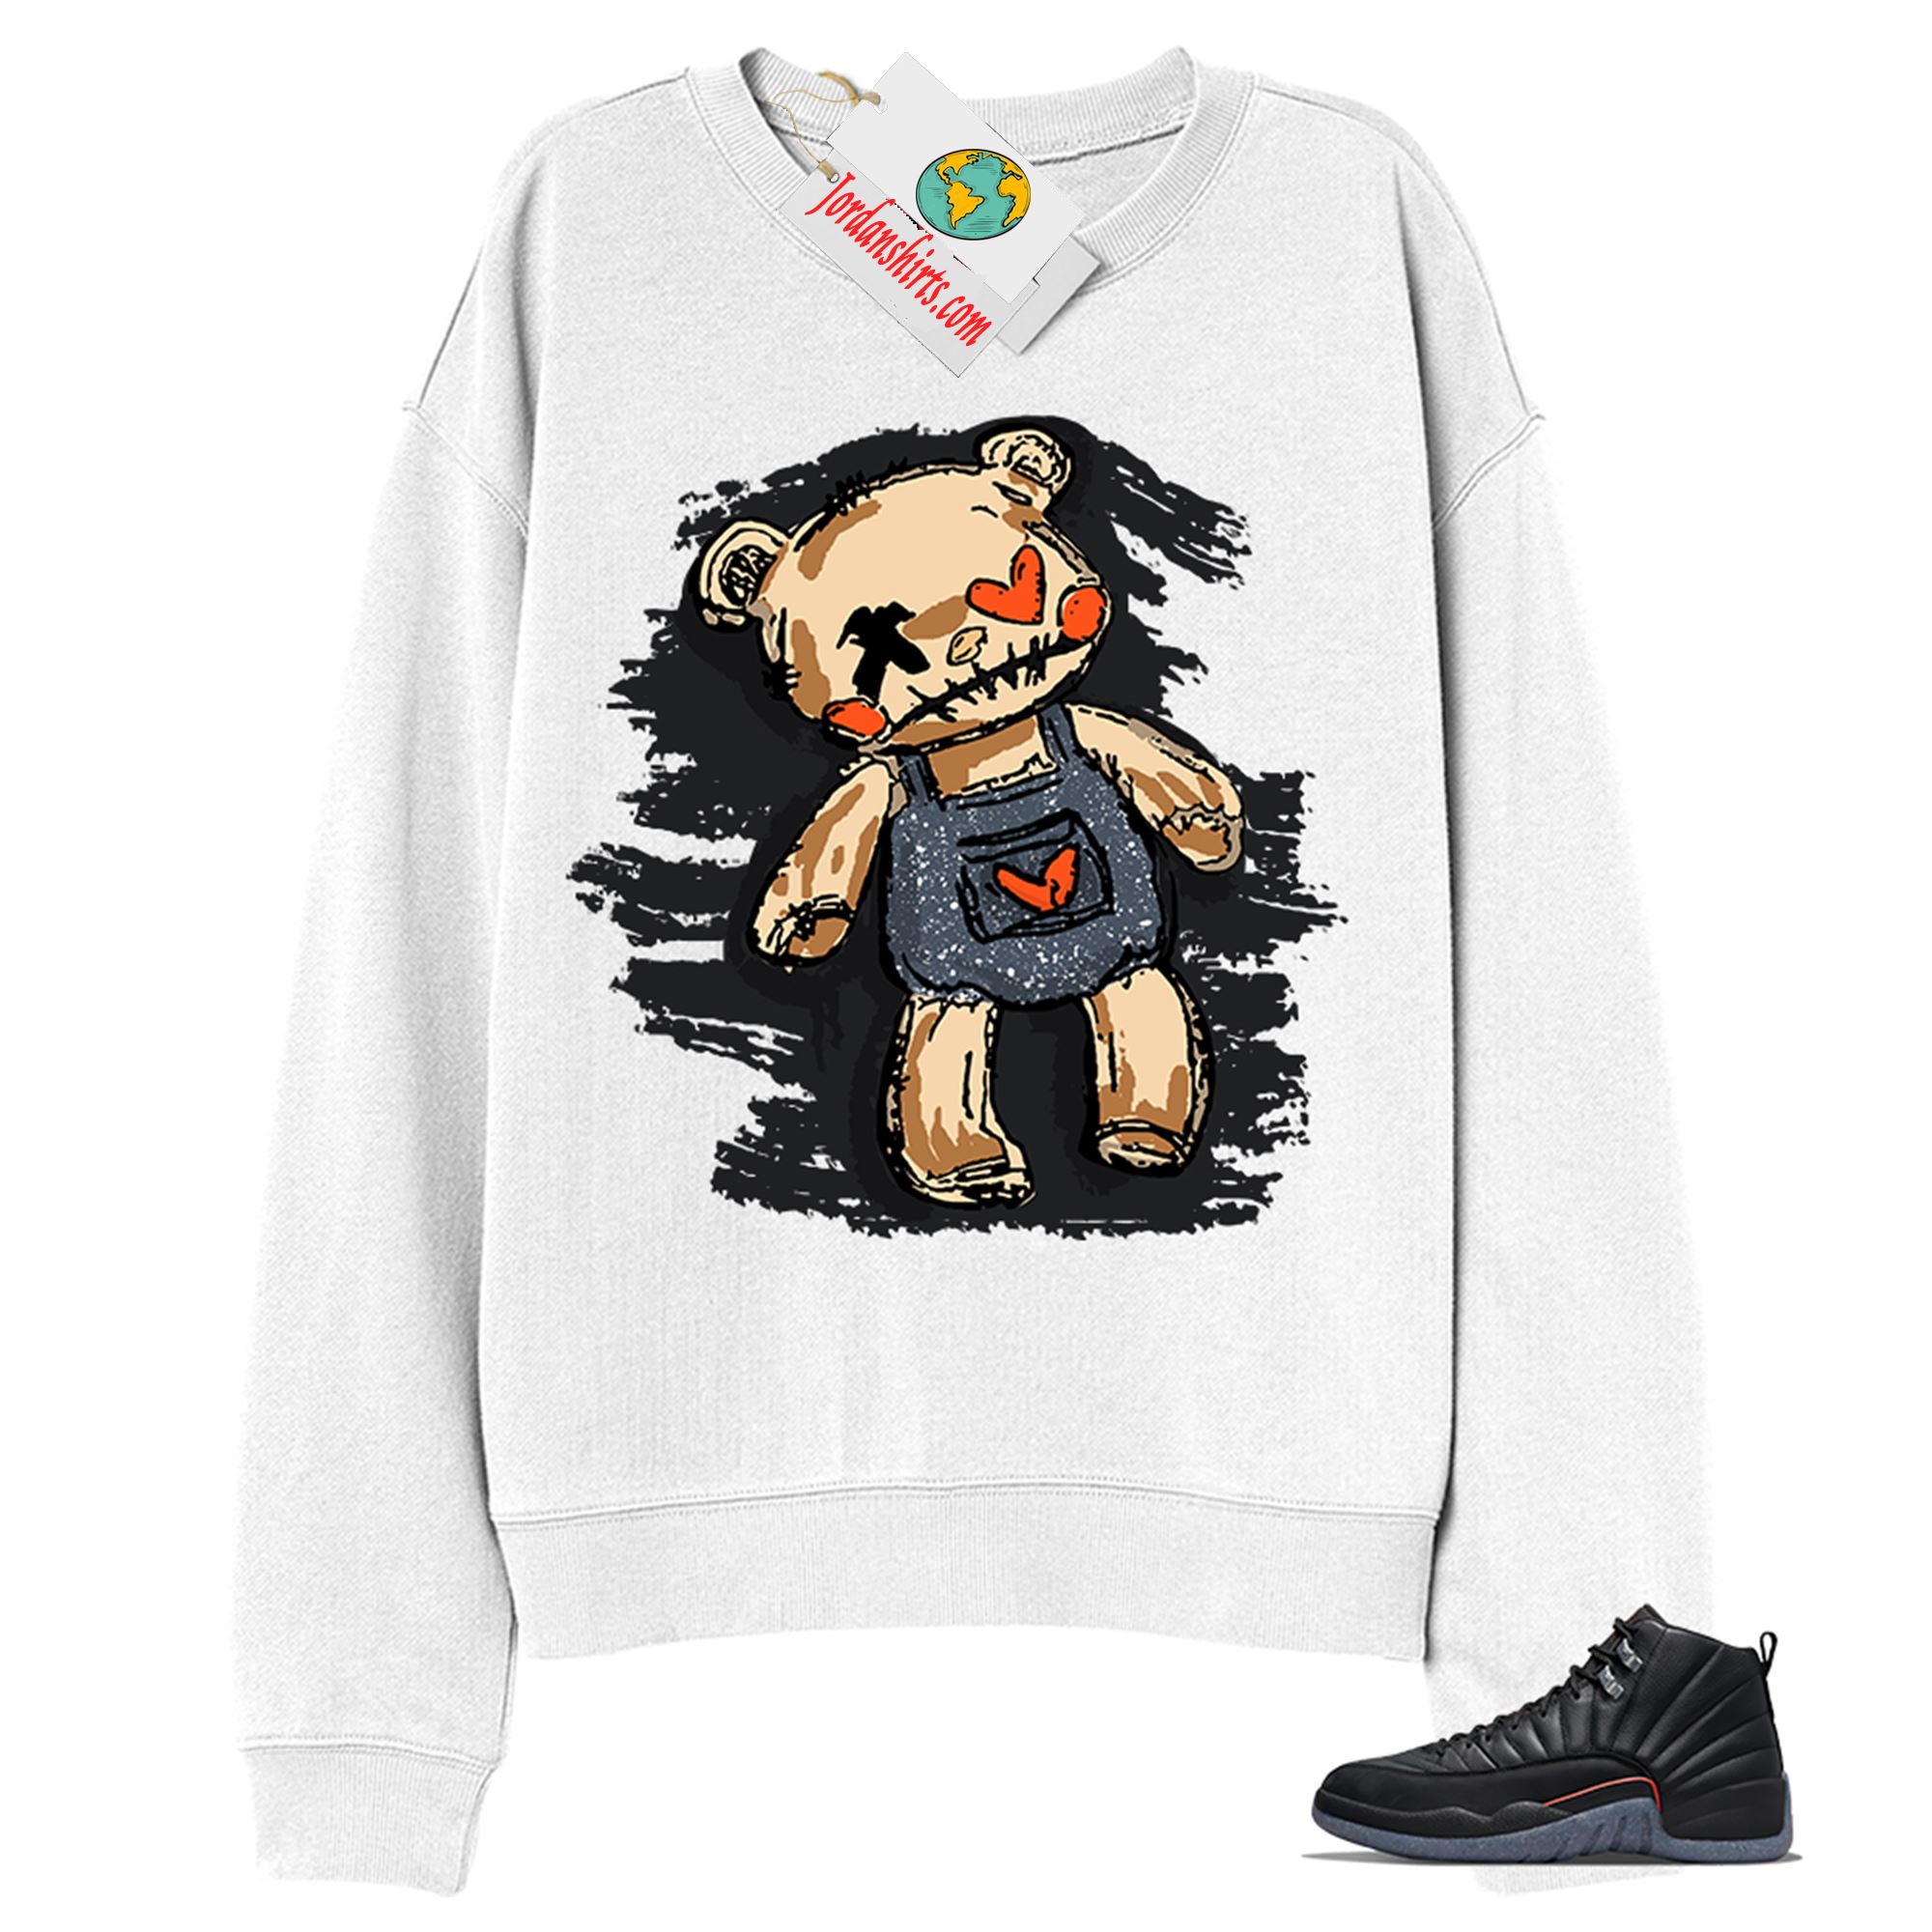 Jordan 12 Sweatshirt, Teddy Bear Broken Heart White Sweatshirt Air Jordan 12 Utility Grind 12s Full Size Up To 5xl